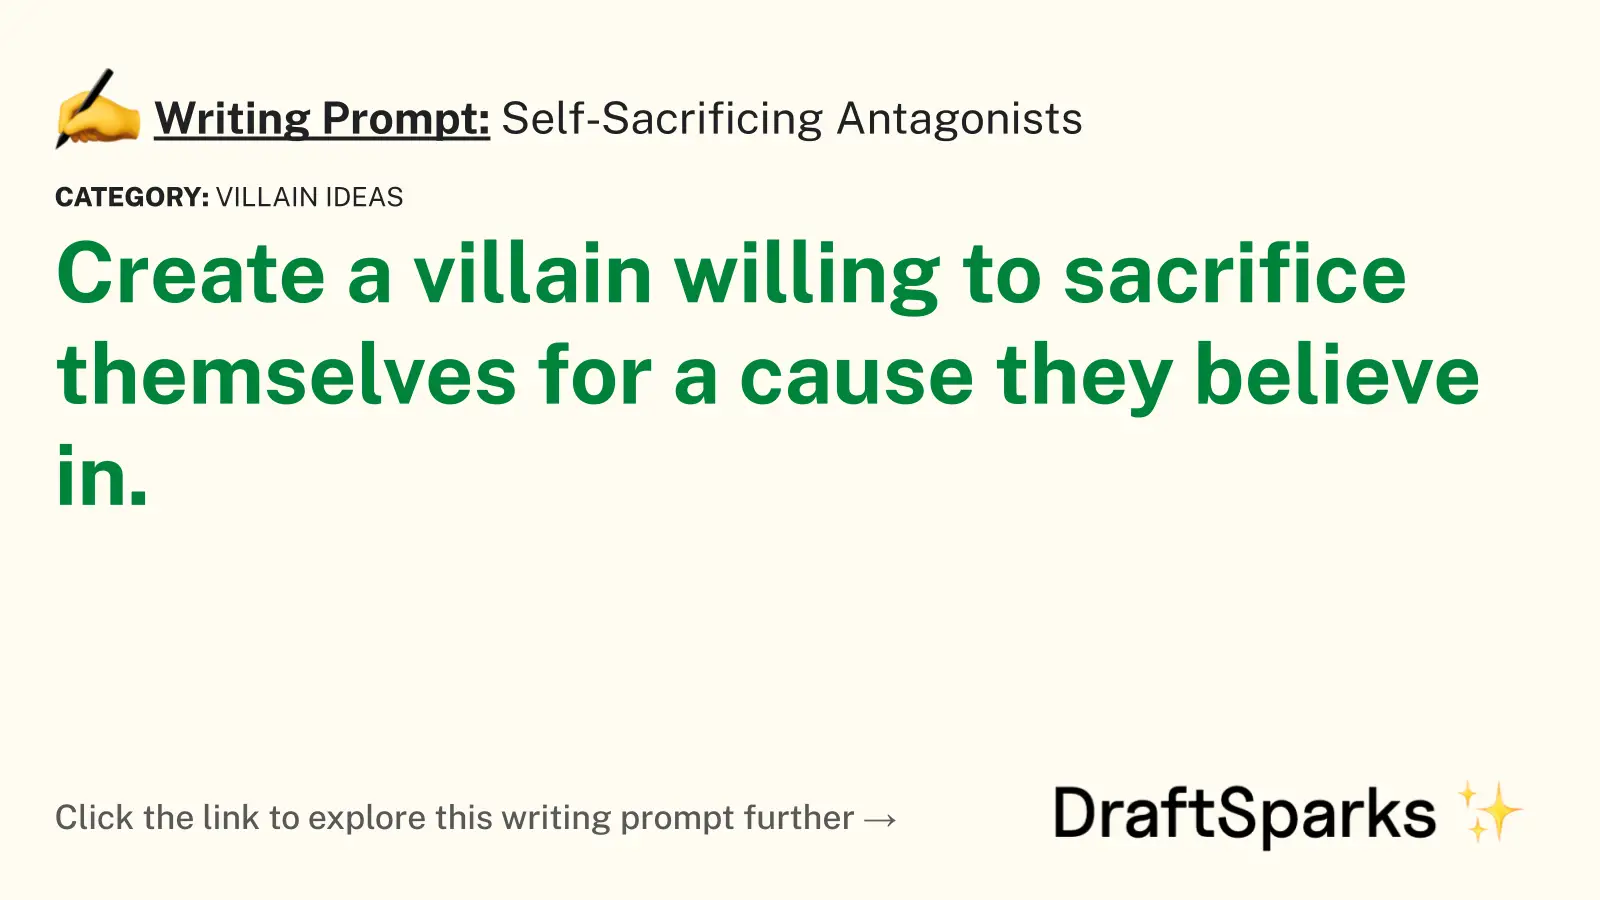 Self-Sacrificing Antagonists